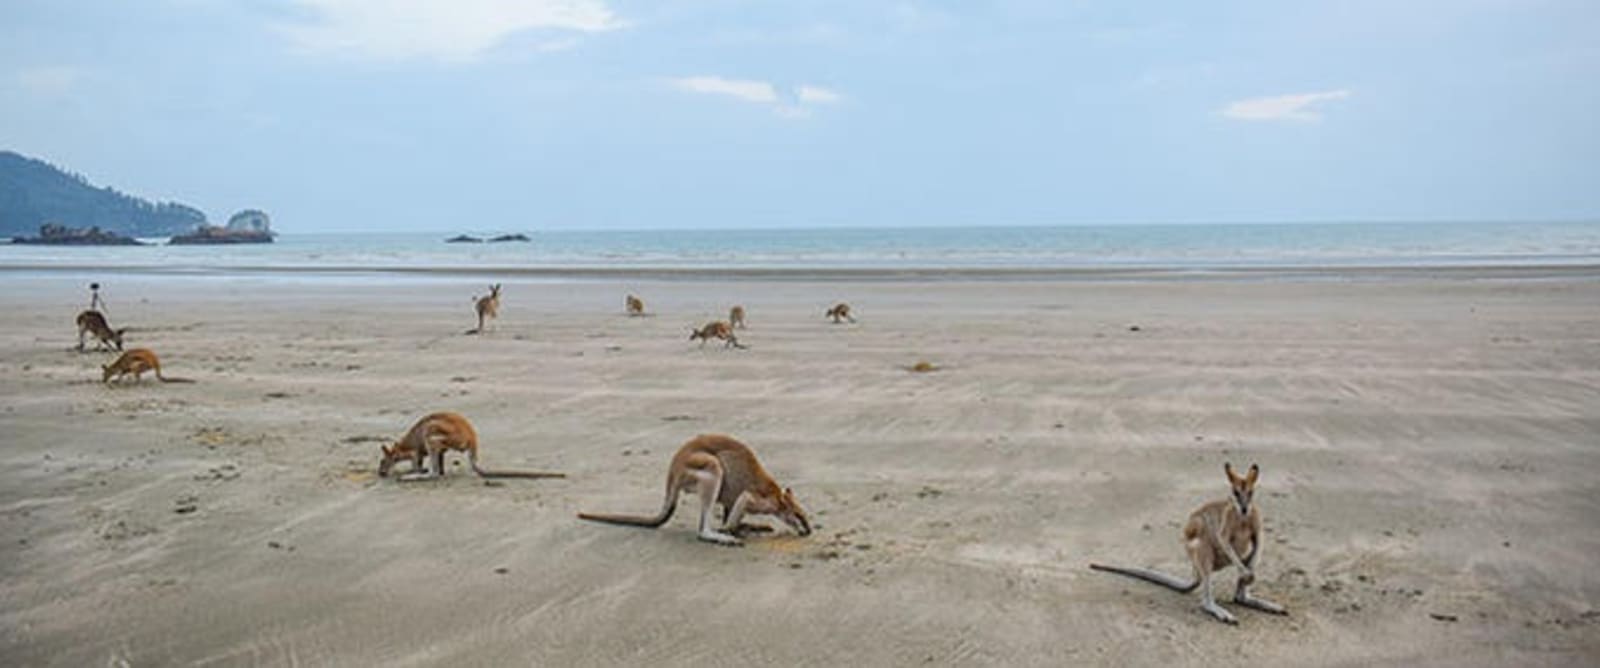 kangaroos-on-cape-hillsborough-casuarina-beach.jpg